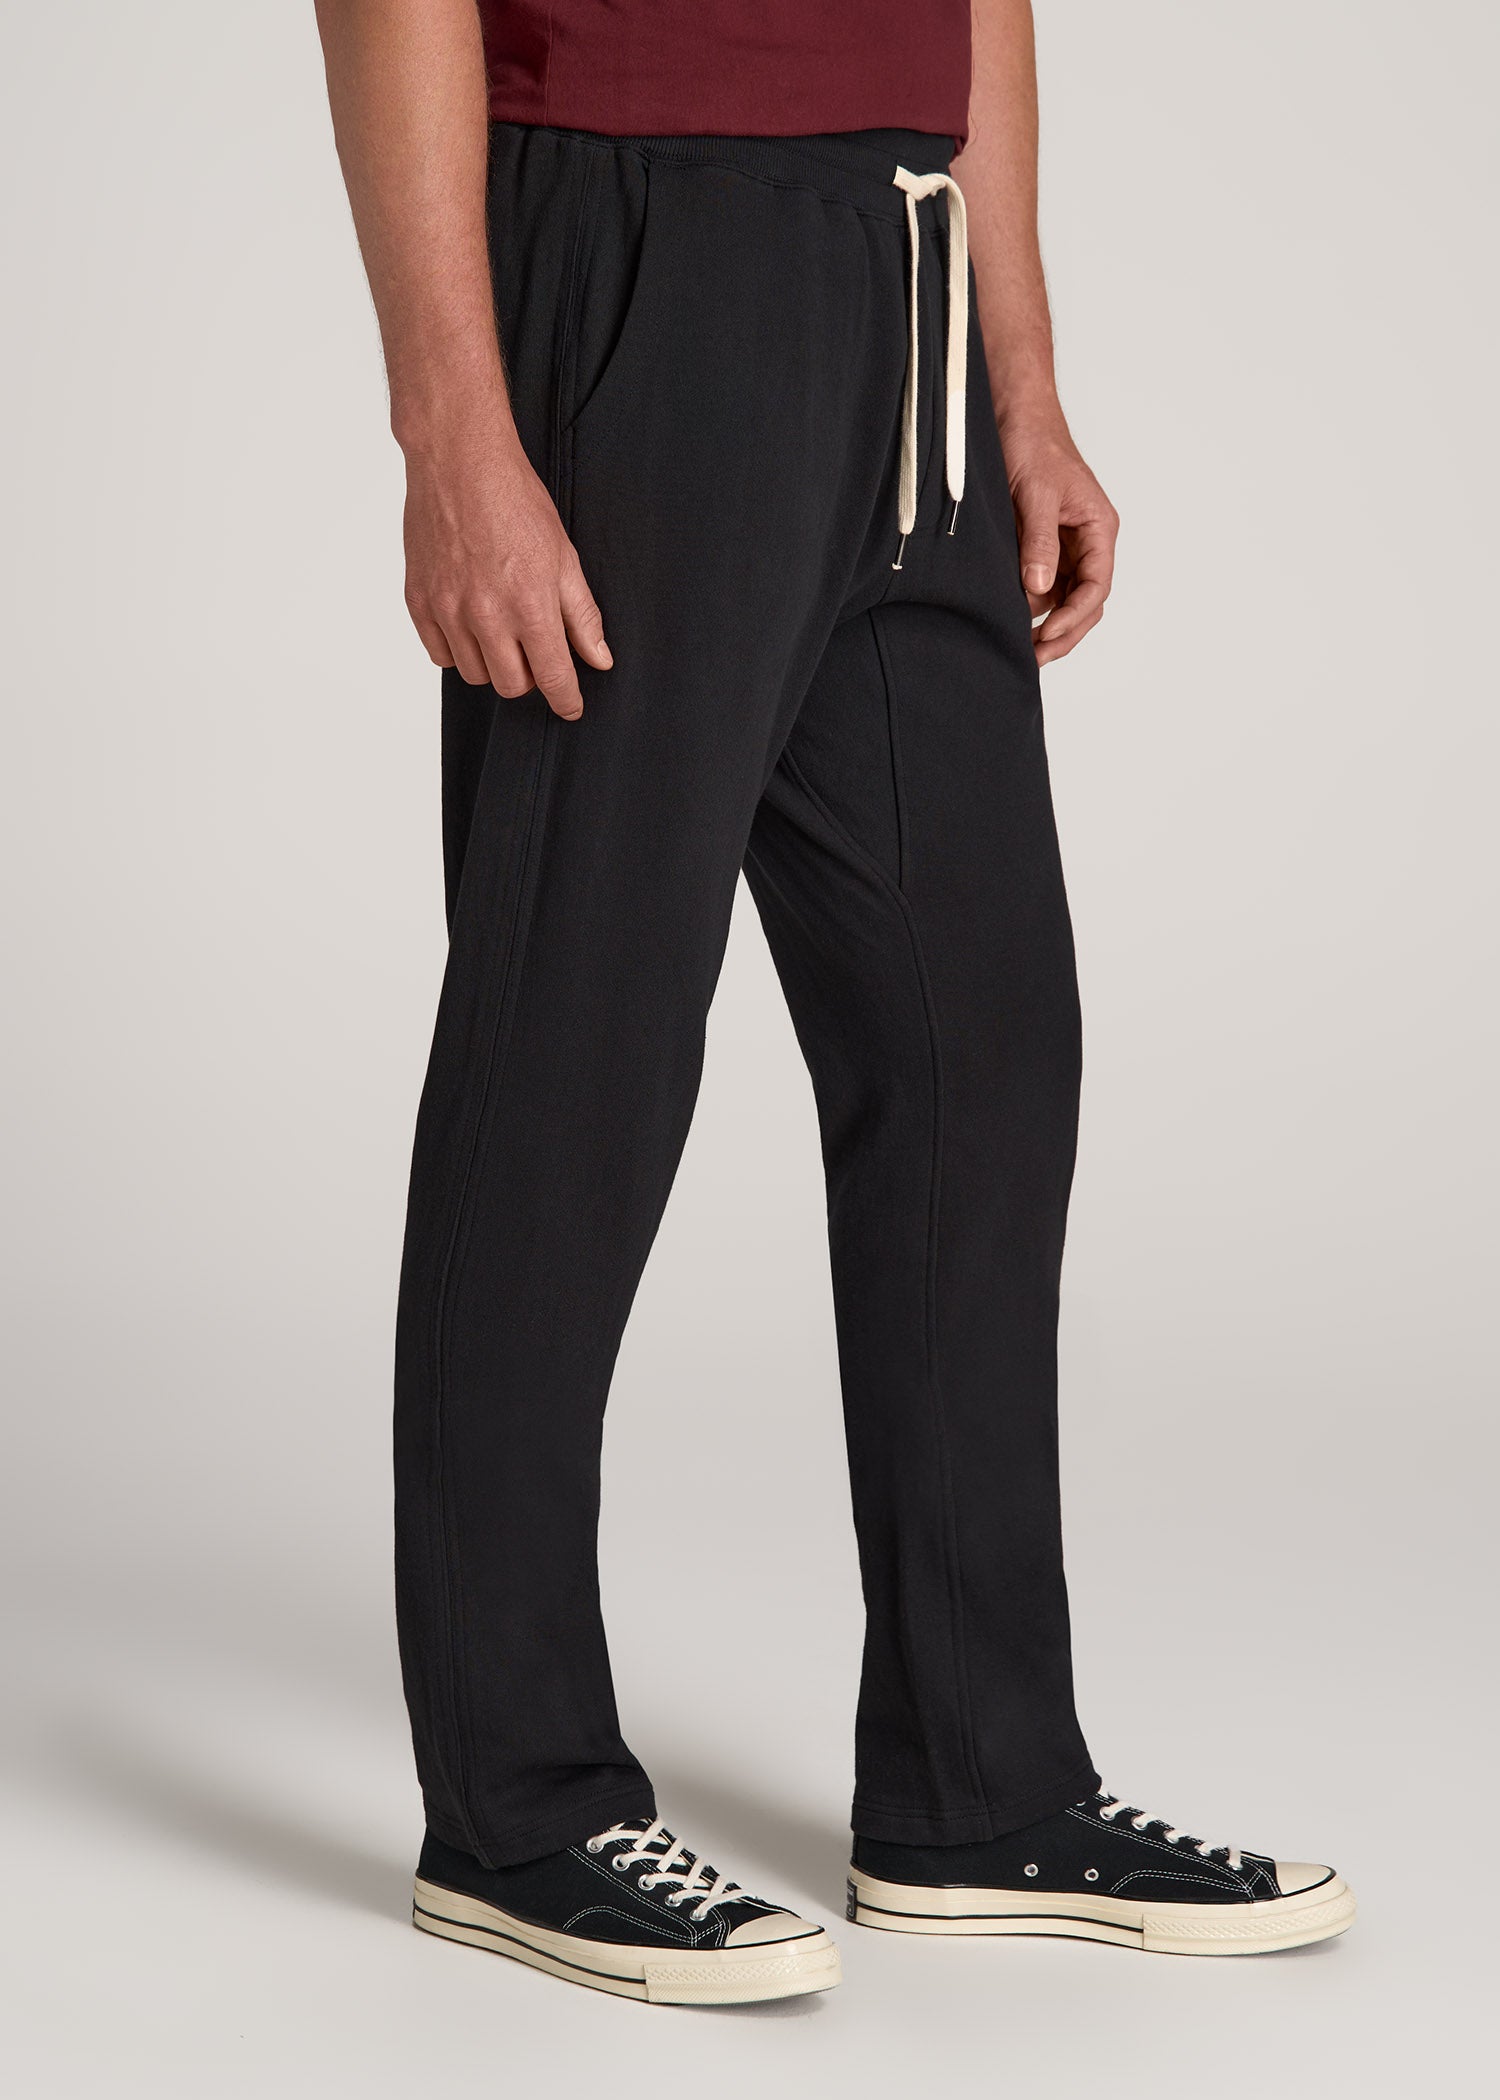 Nike Running Pants Medium Adult Black Athletic Stretch Ankle Zip Pocket  Womens M